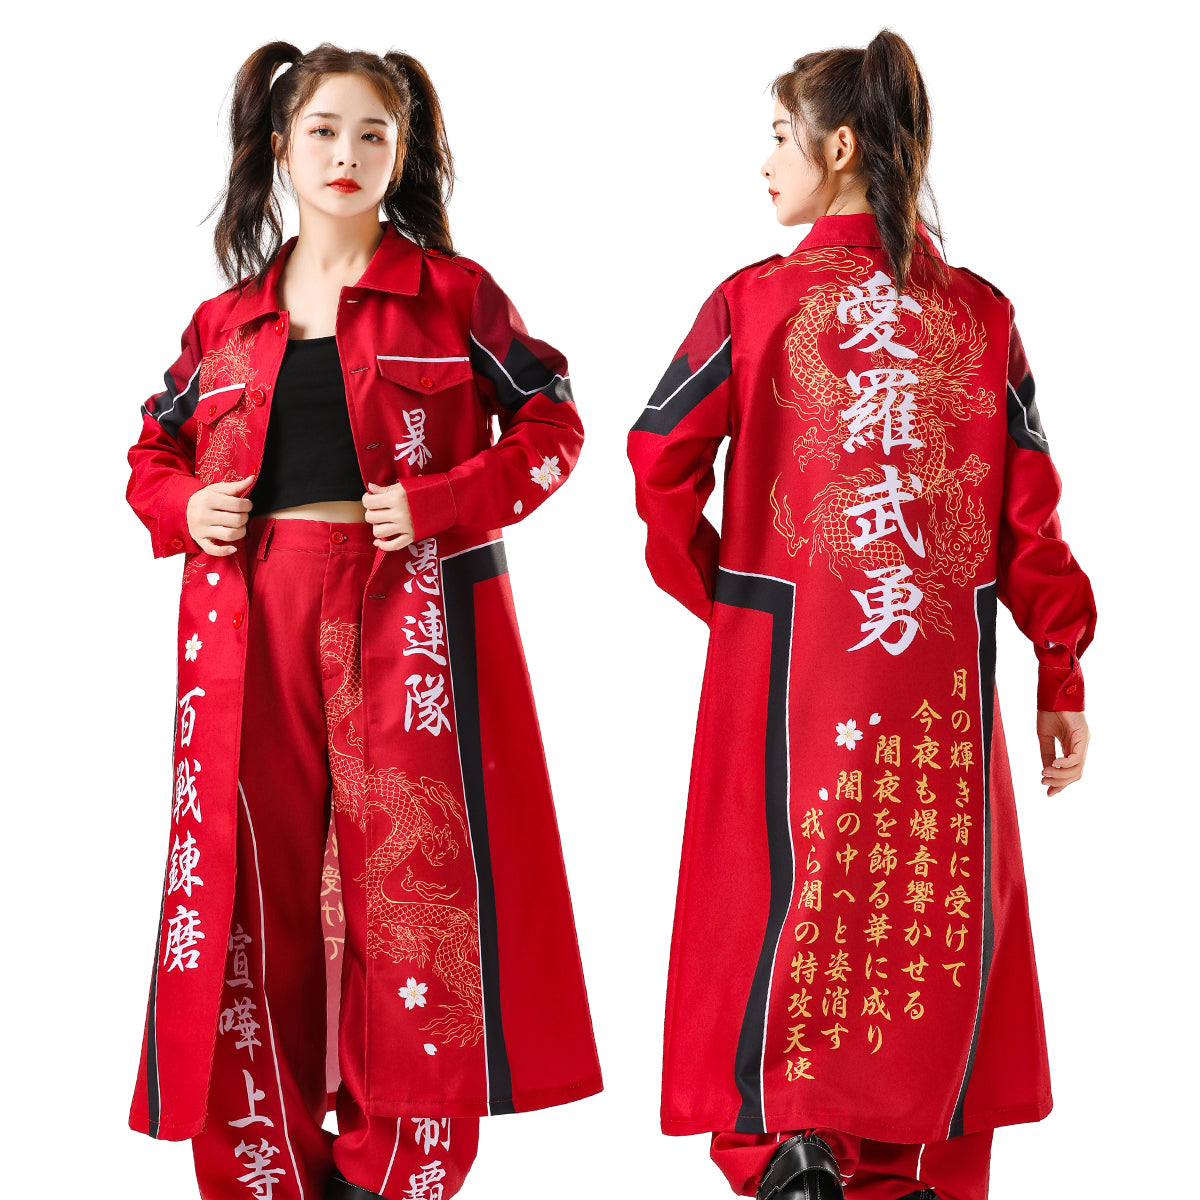 HOLOUN Japanese Bosozoku Kimono Cosplay Costume Special Attack Uniform Coat Dragon Pattern Red Color Halloween Christmas Carnival